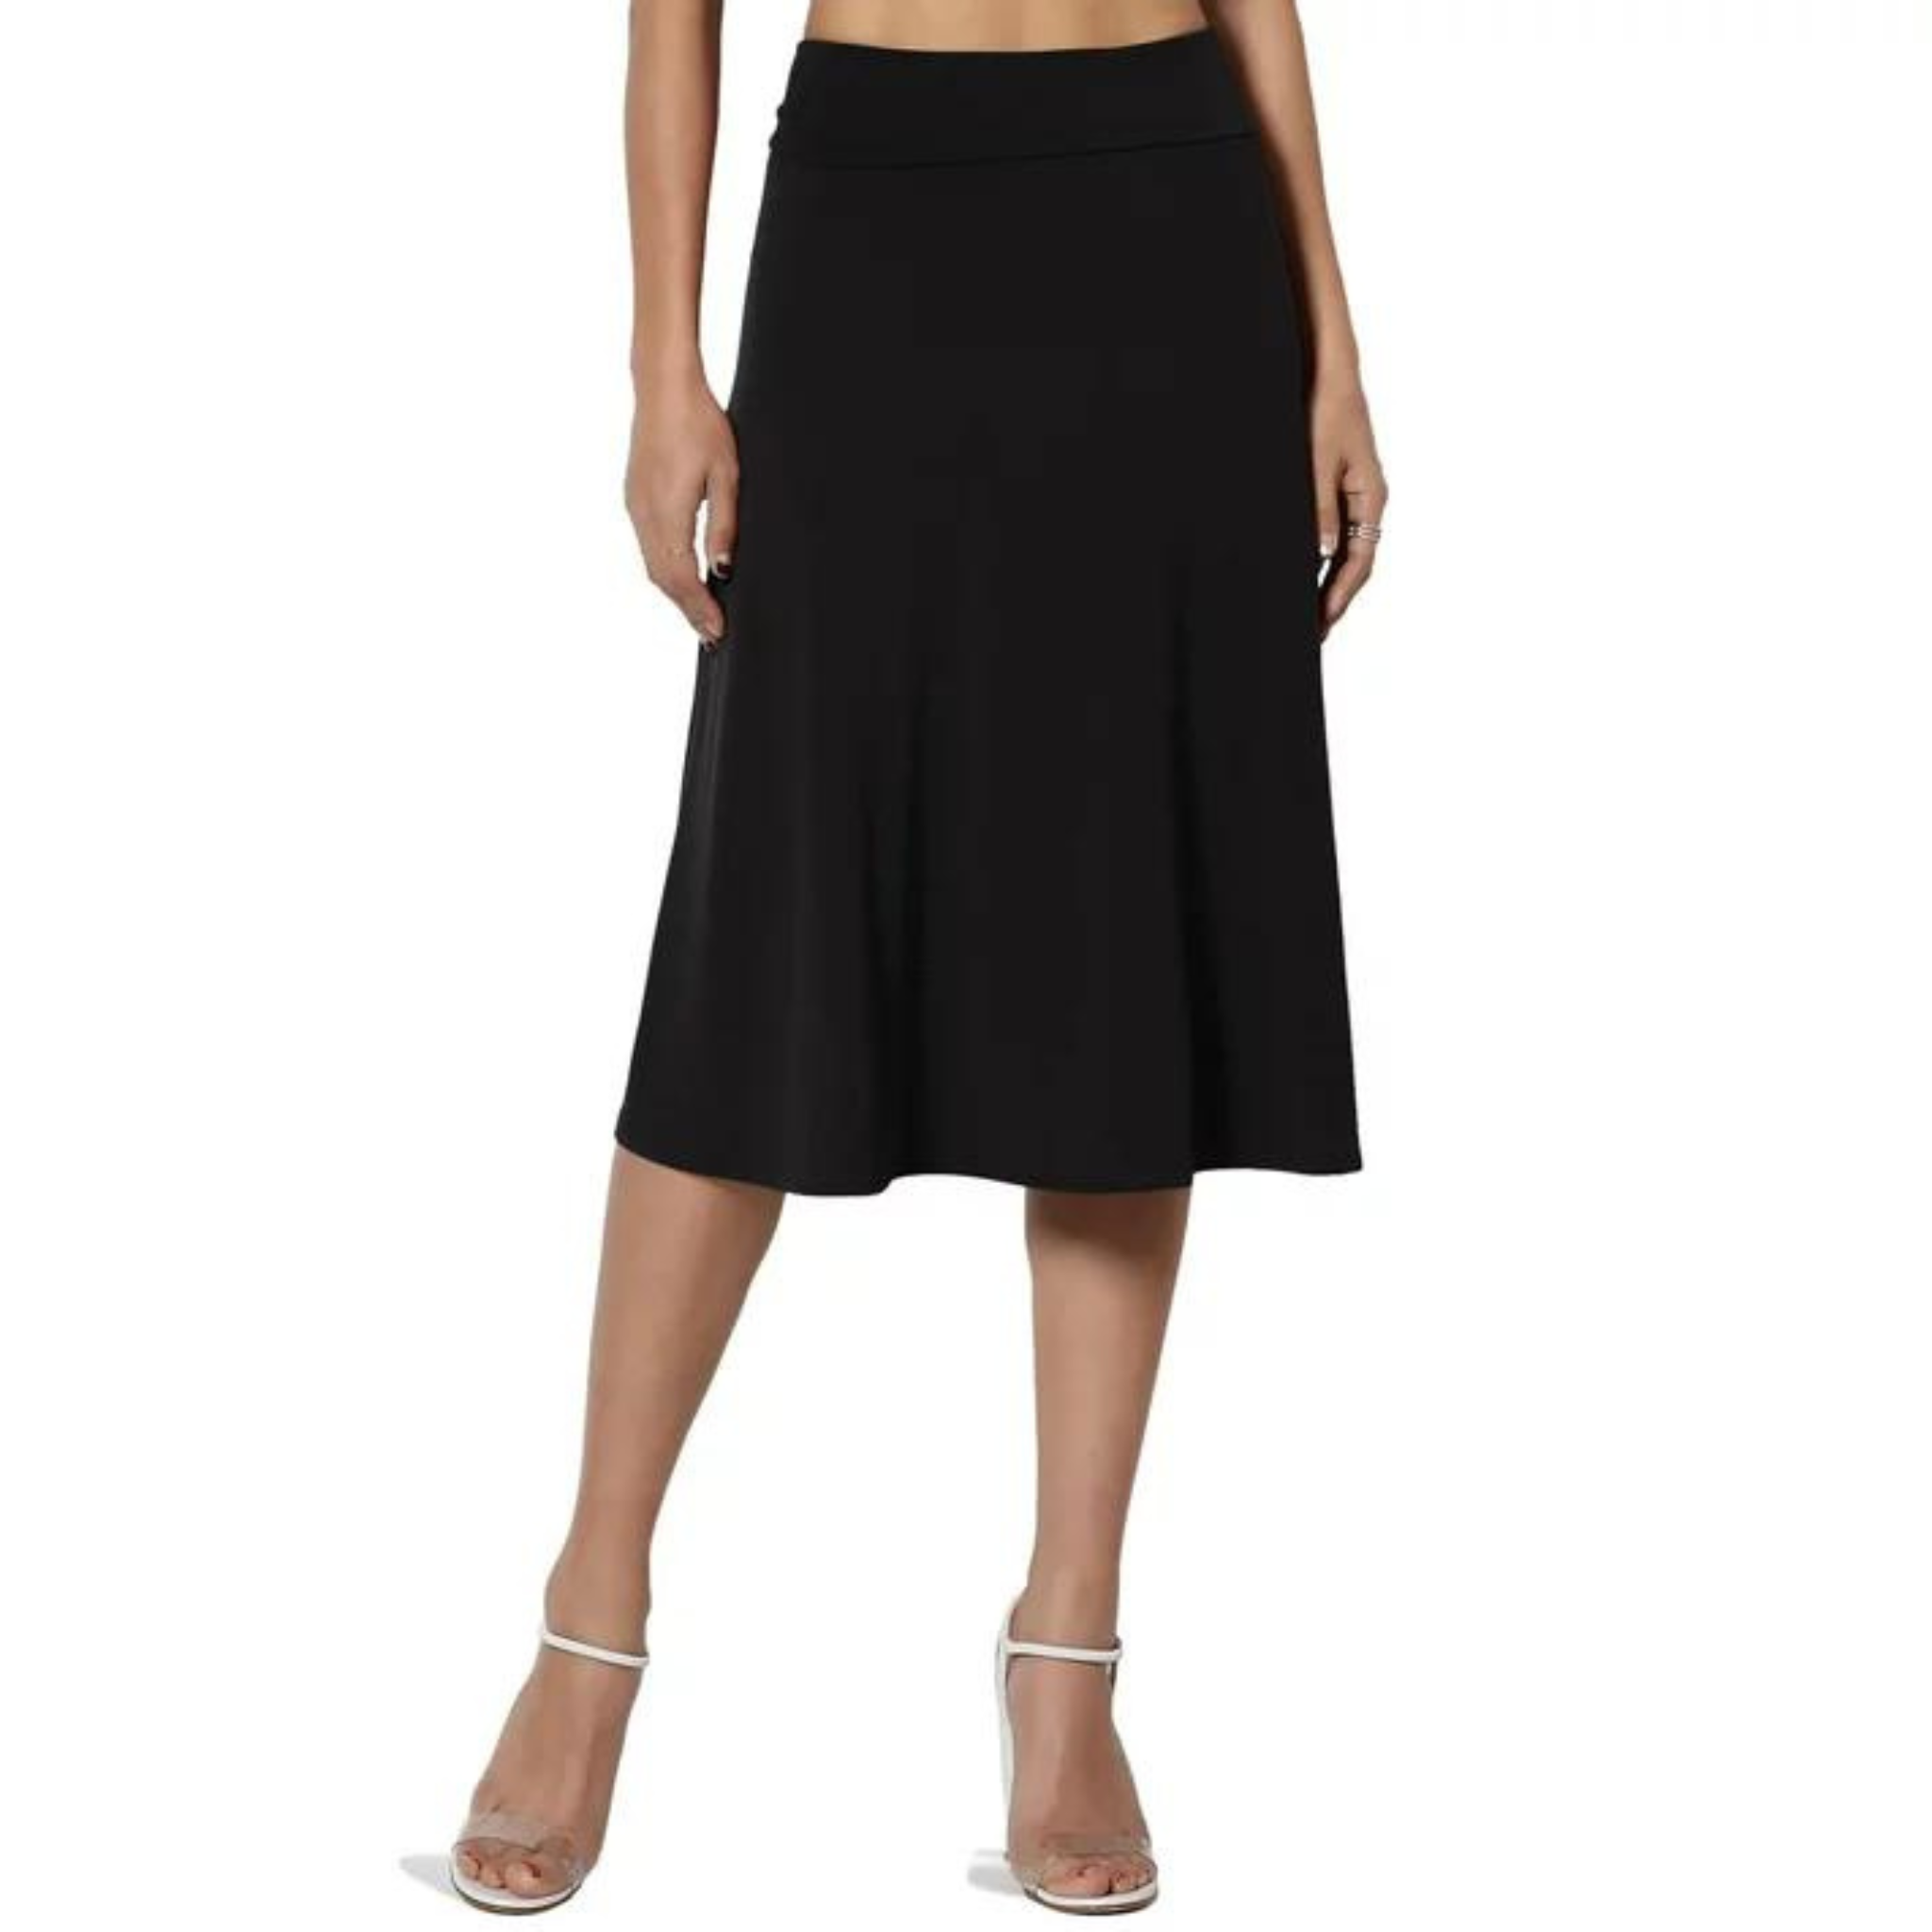 Walmart A-Line Comfy Knee Length Skirt (24 COLORS!)